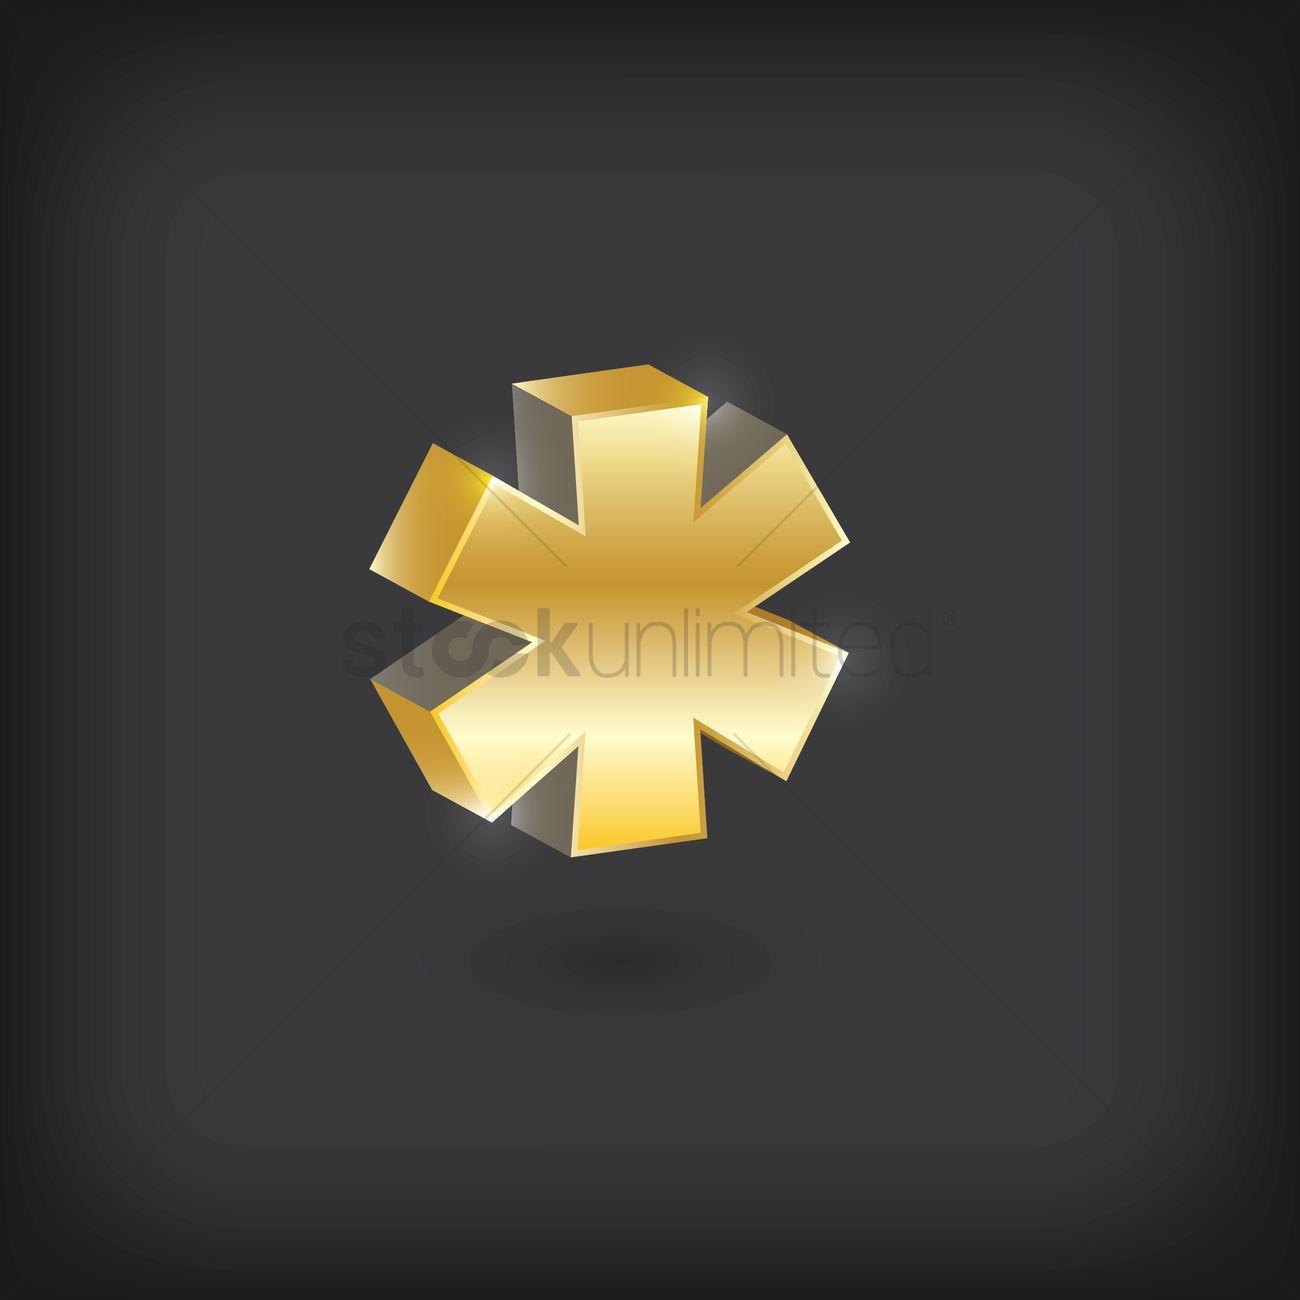 Yellow Asterisk Logo - Asterisk symbol Vector Image